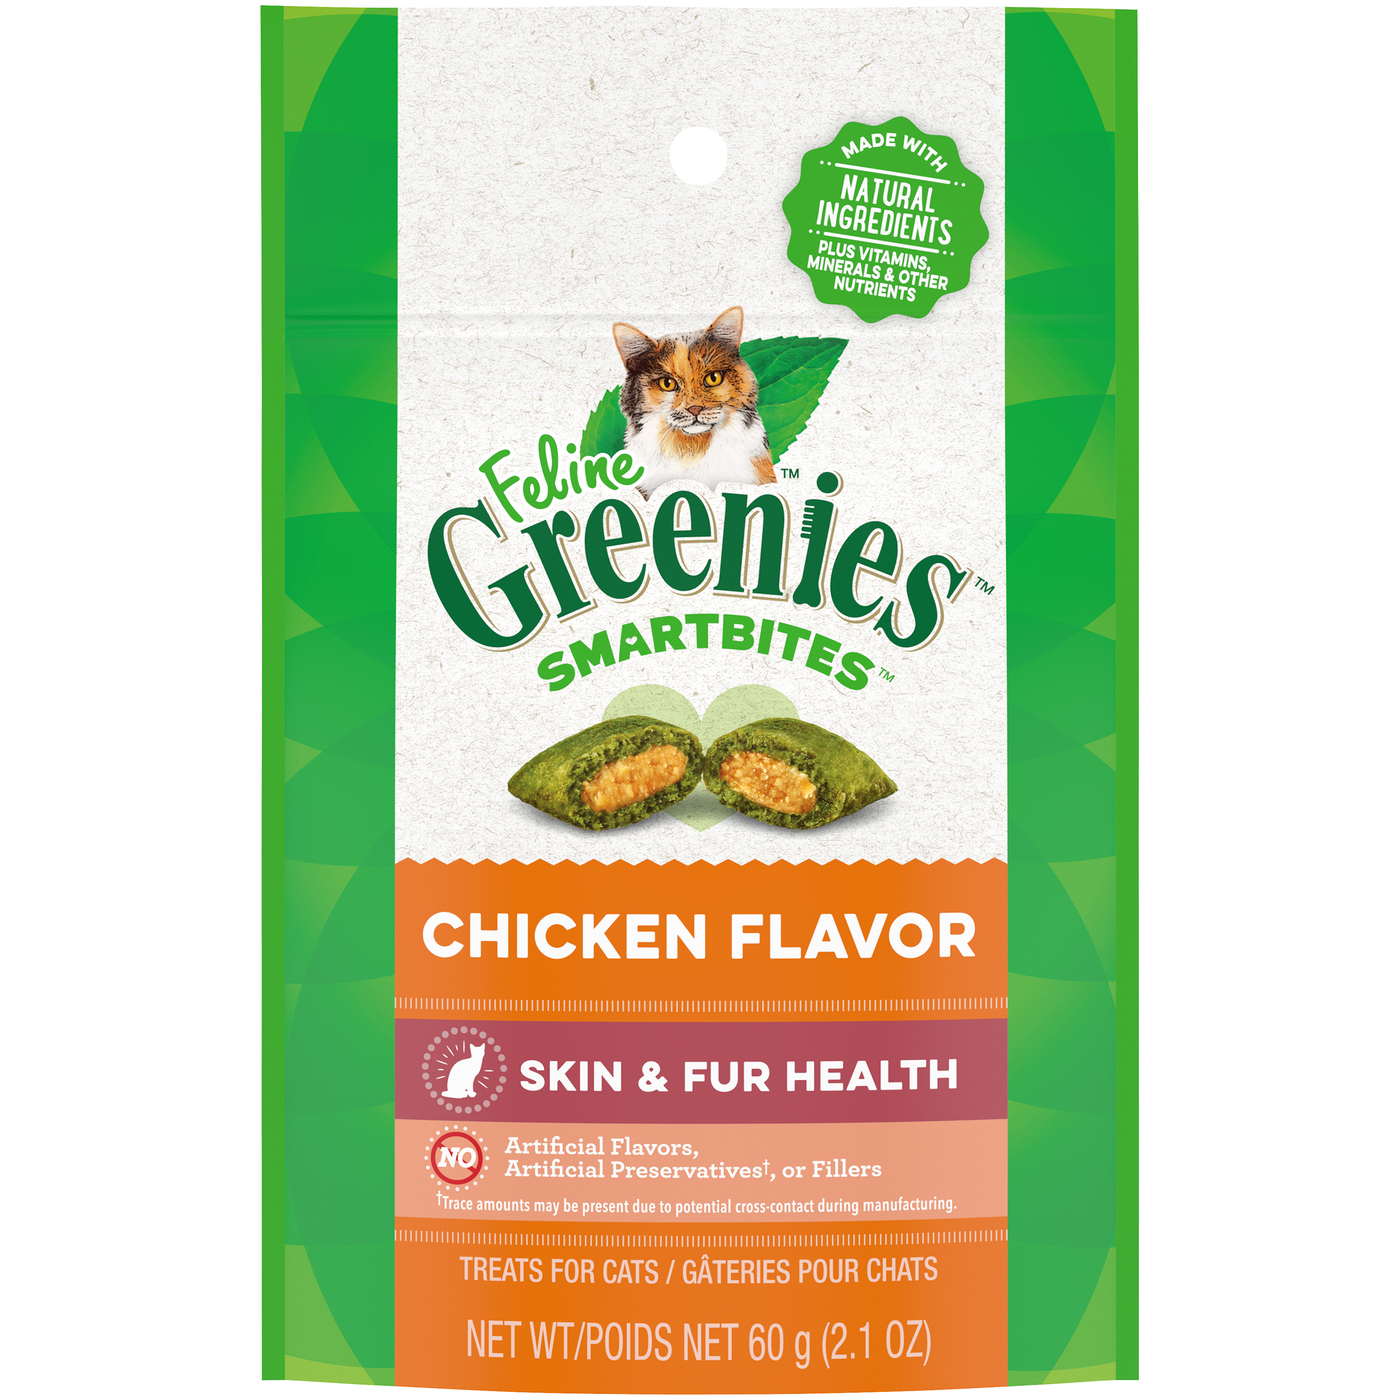 Feline Greenies Smartbites Skin & Fur Health Chicken Flavor Cat Treats 2.1